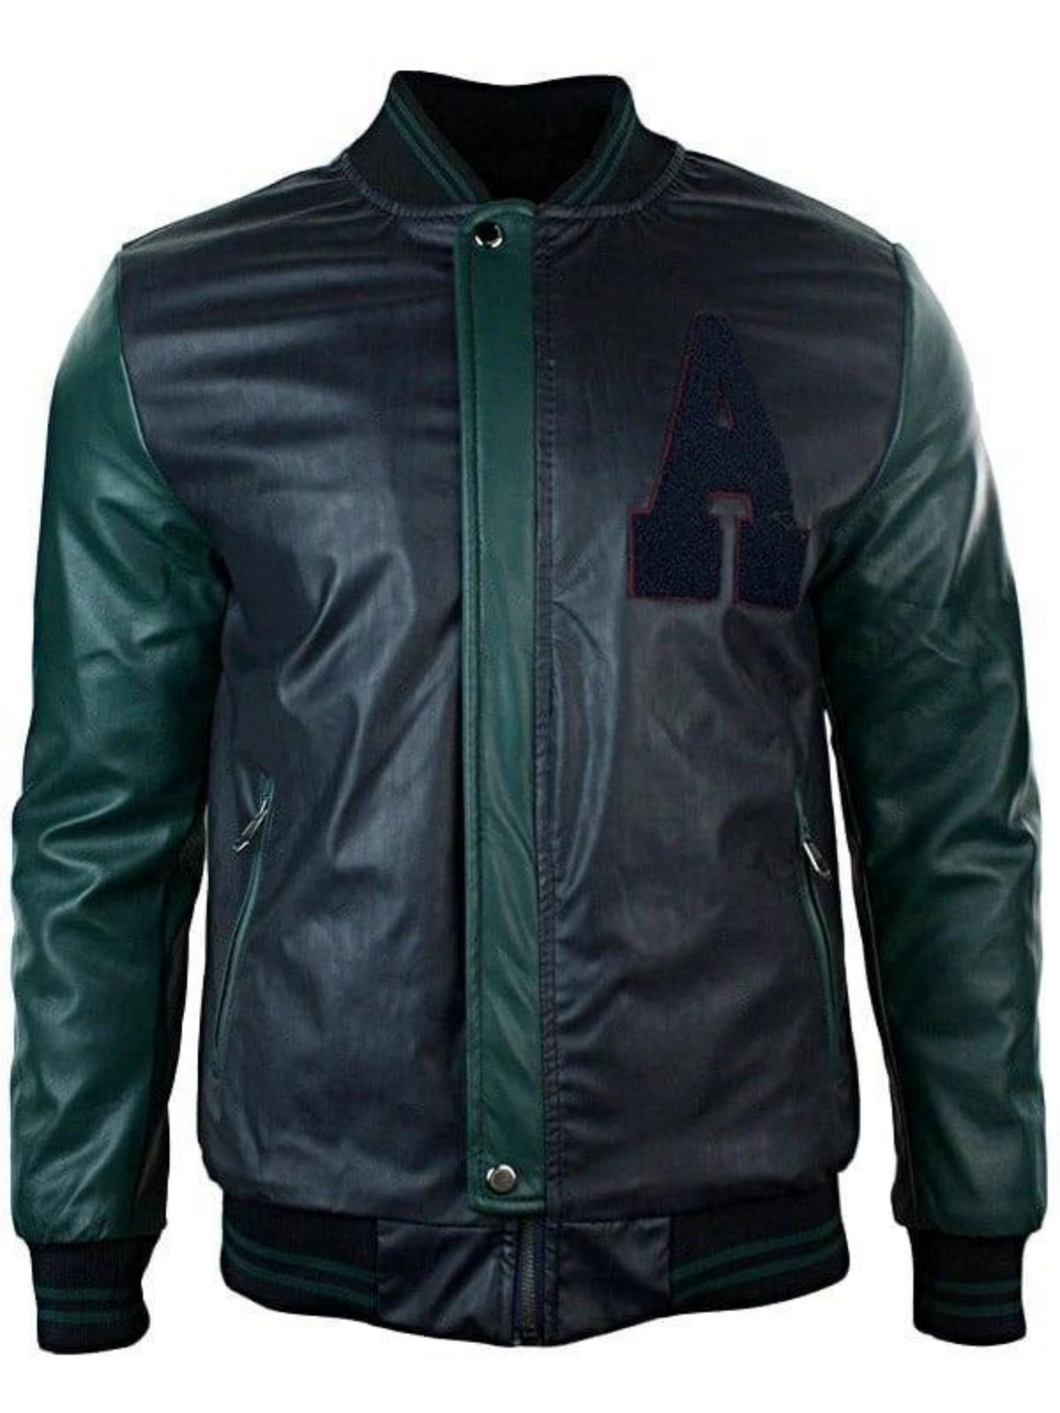 Mens Black Synthetic Leather Baseball Jacket